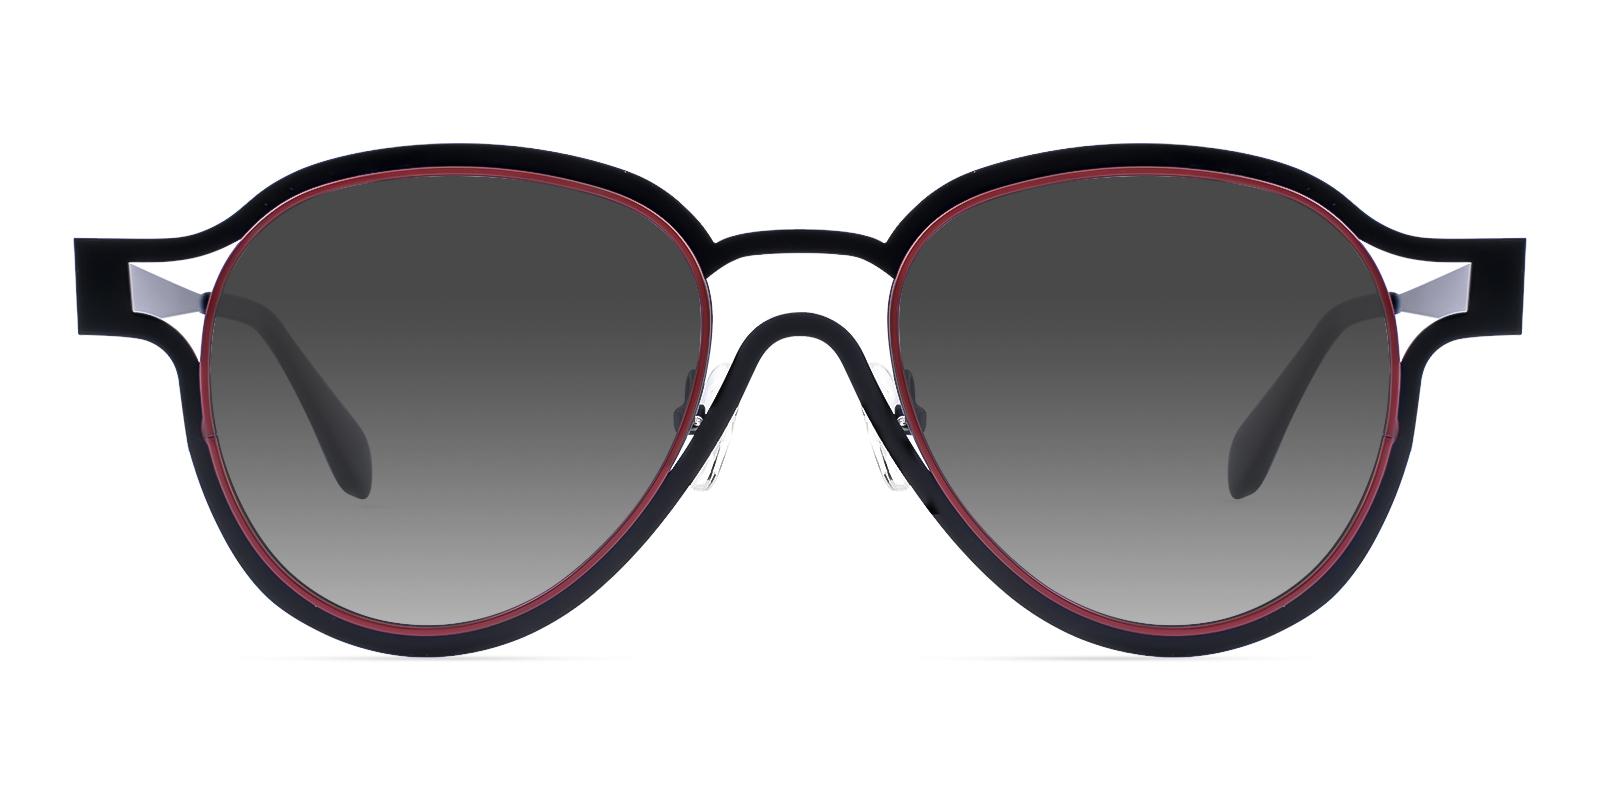 Phano Black Metal NosePads , Sunglasses Frames from ABBE Glasses